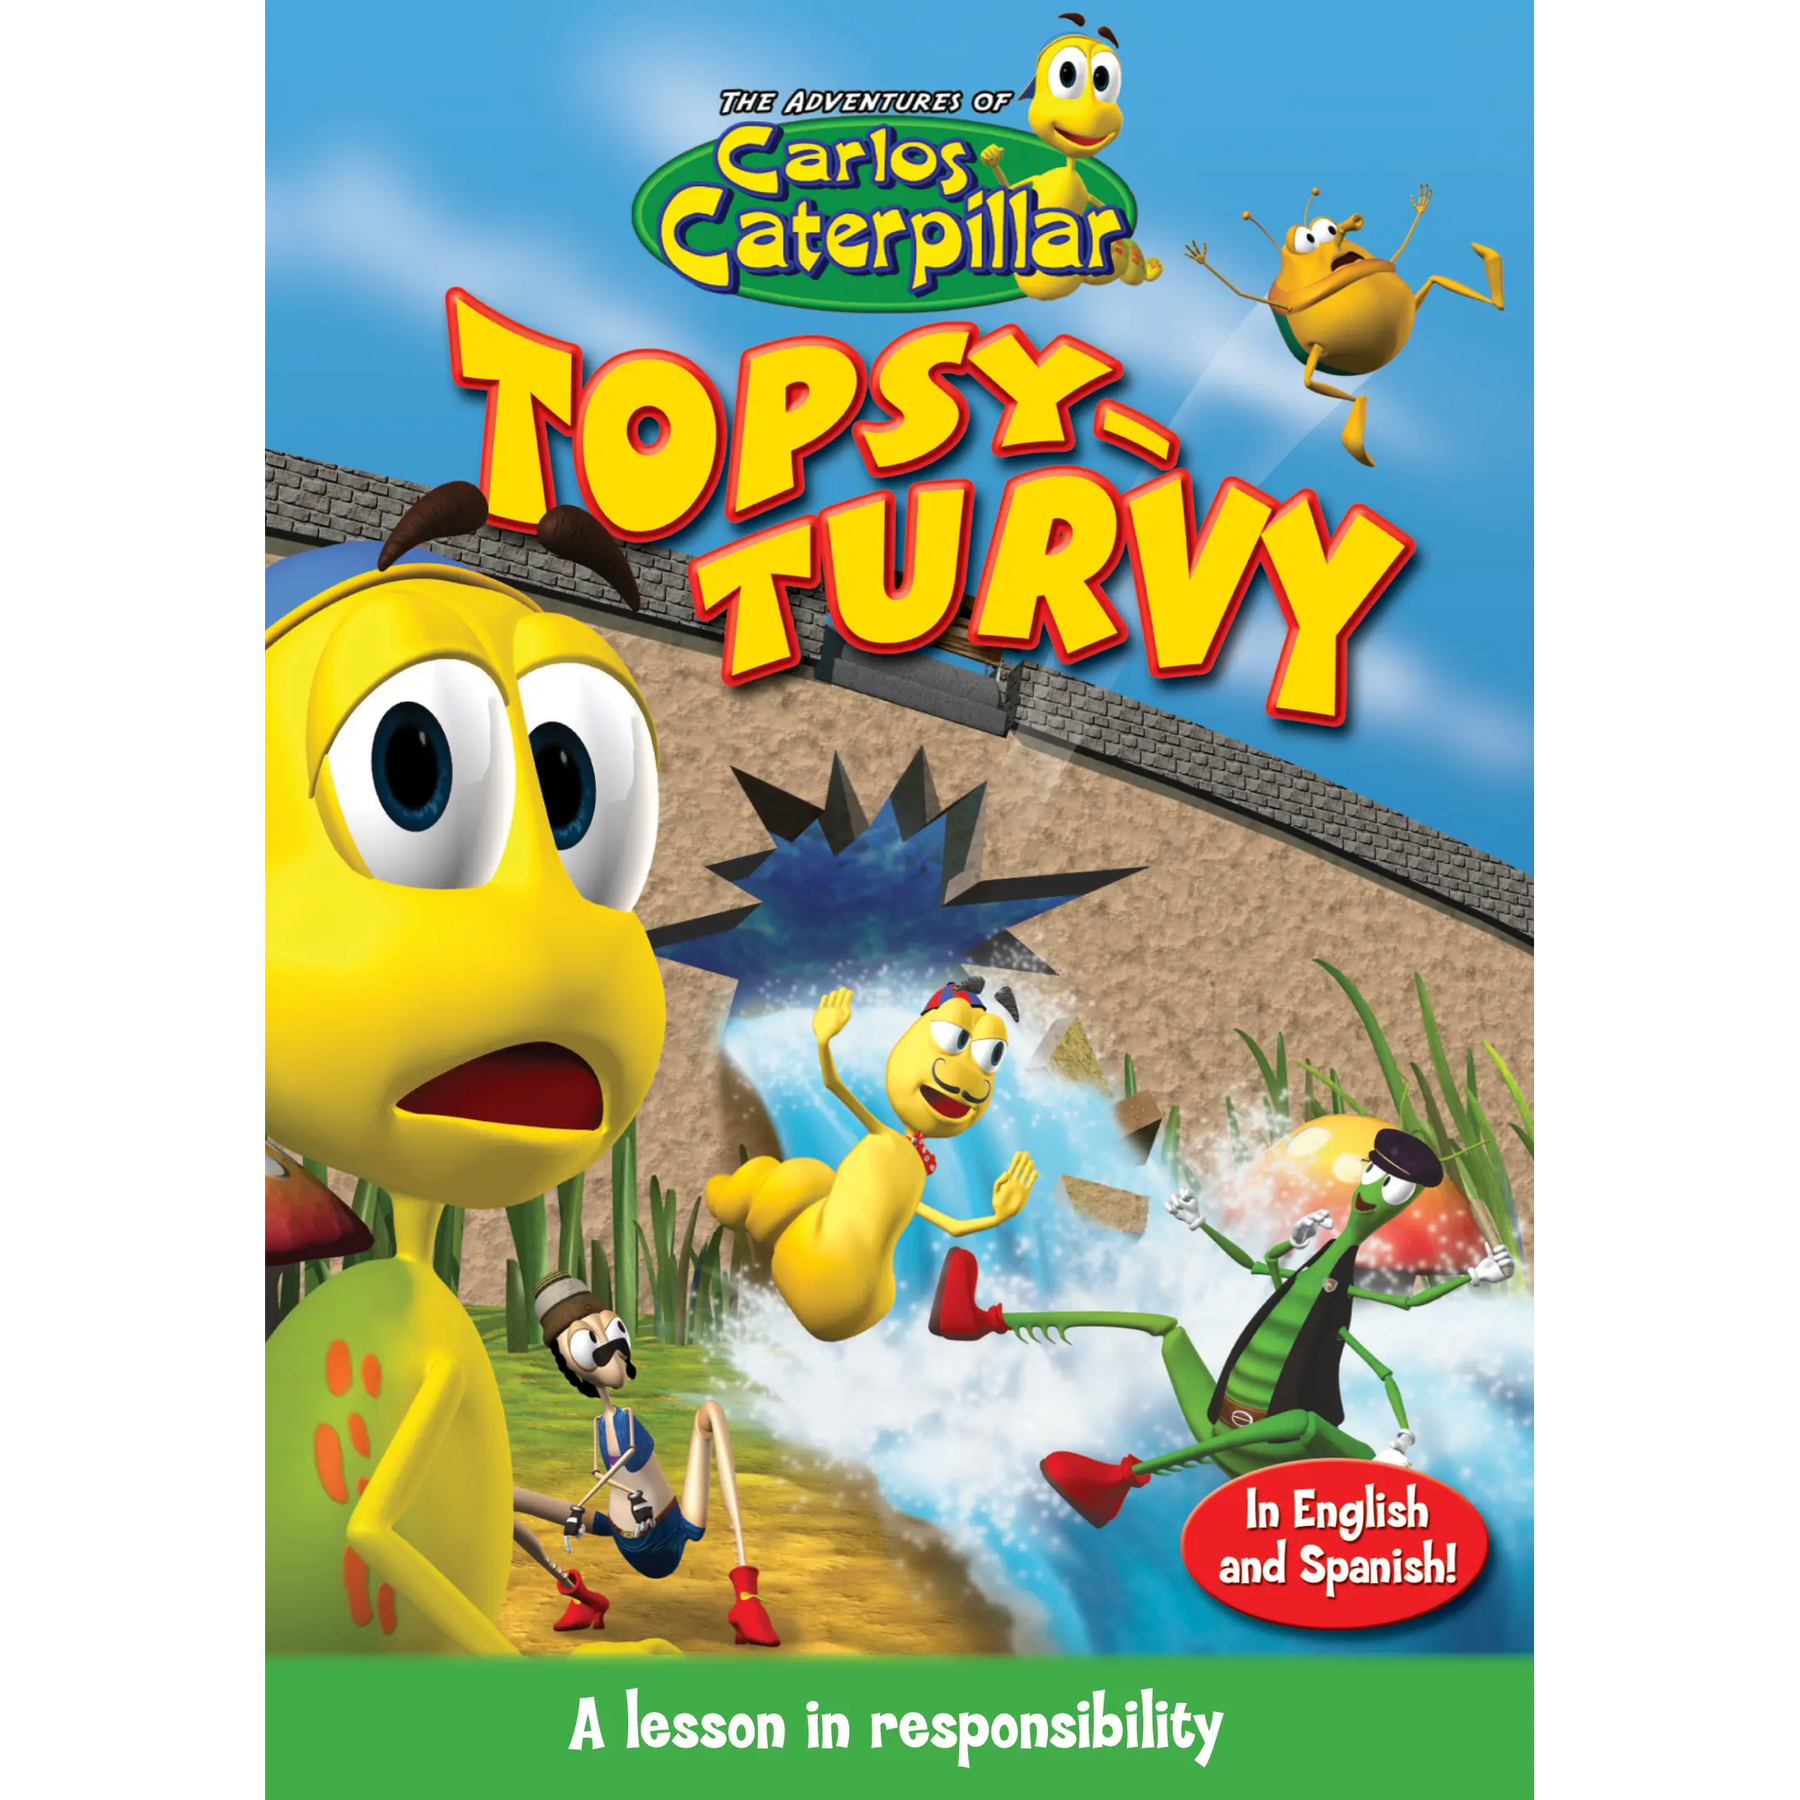 Carlos Caterpillar Episode 02: Topsy Turvy - Video Download